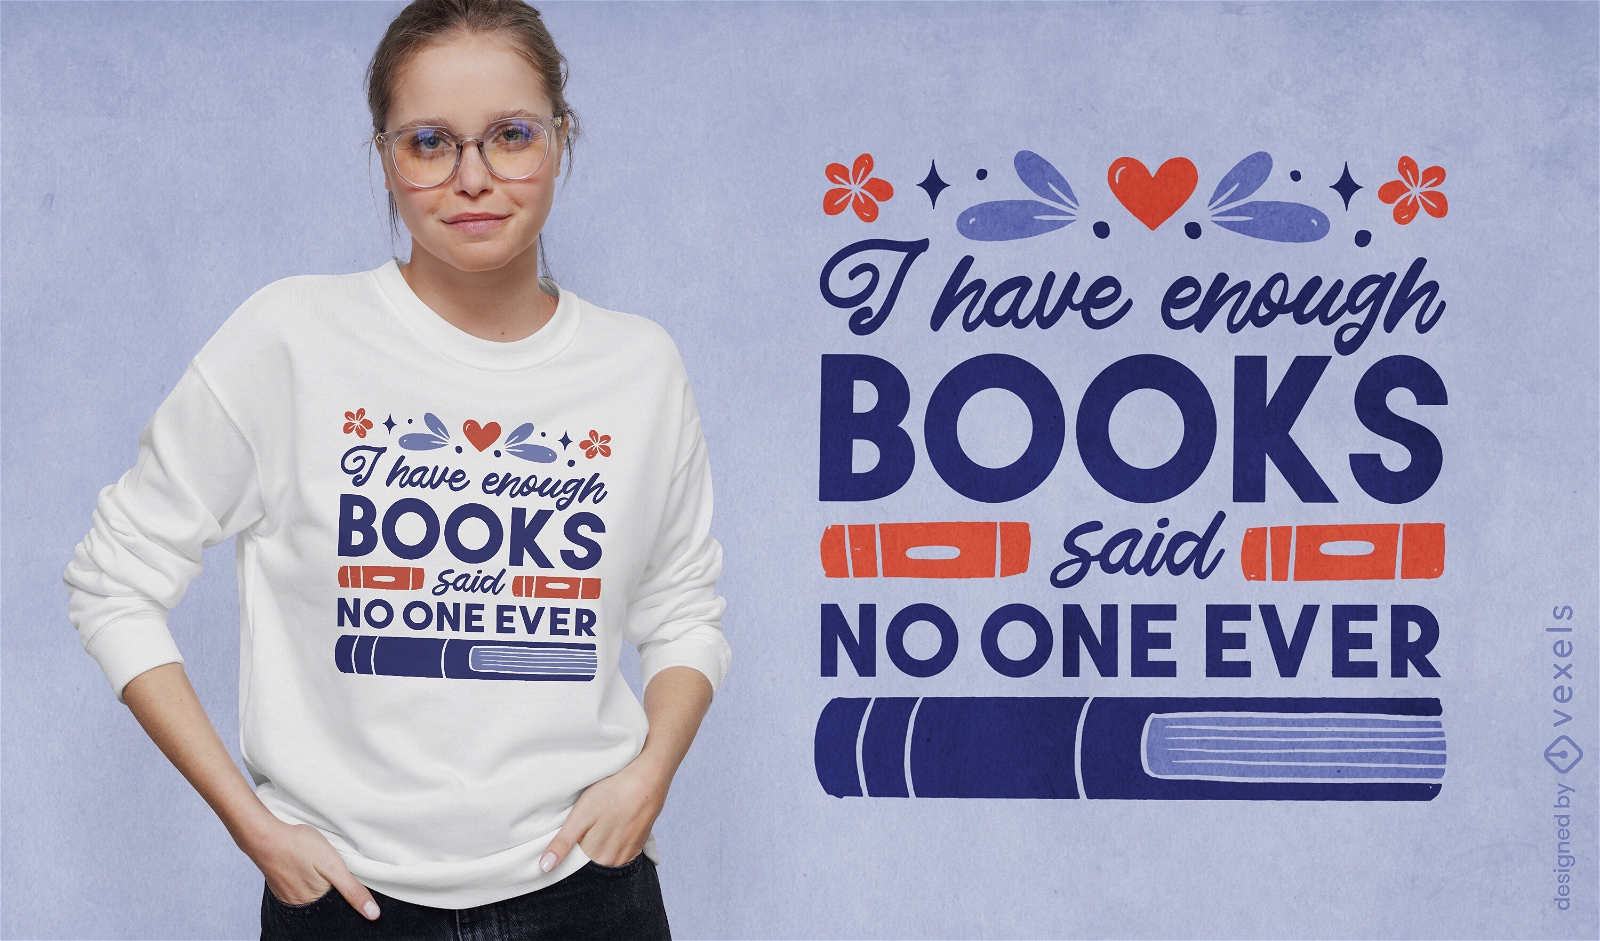 Enough books quote t-shirt design